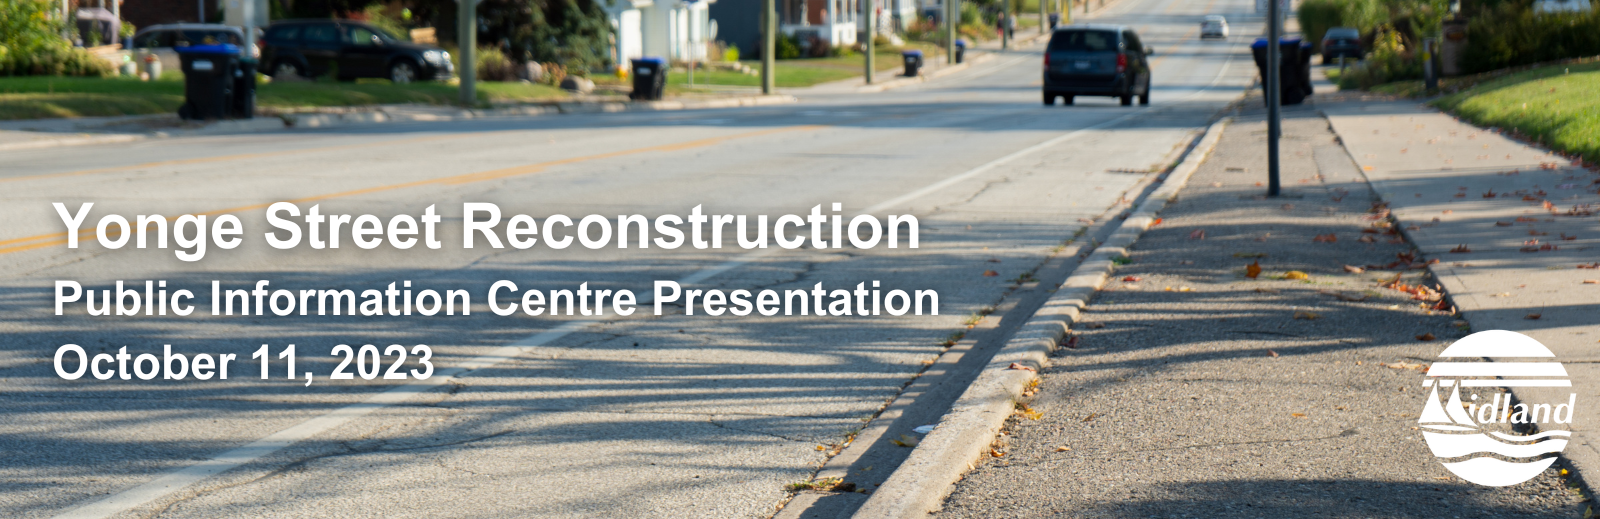 Yonge Street Reconstruction Public Information Centre Presentation October 11, 2023